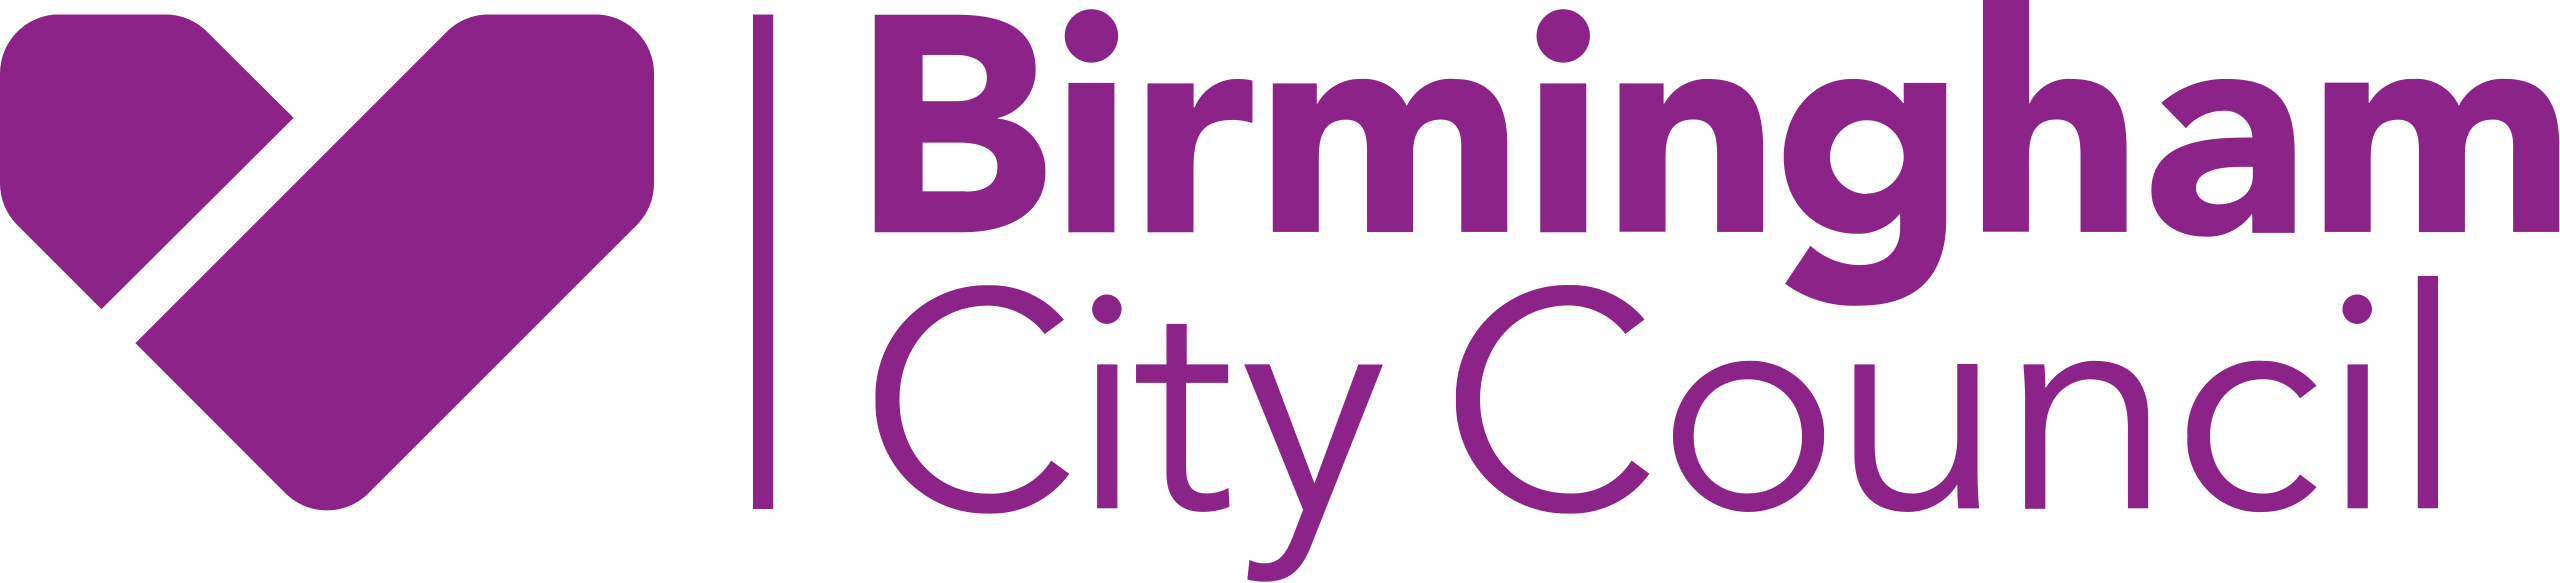 Birmingham_City_Council_logo.svg